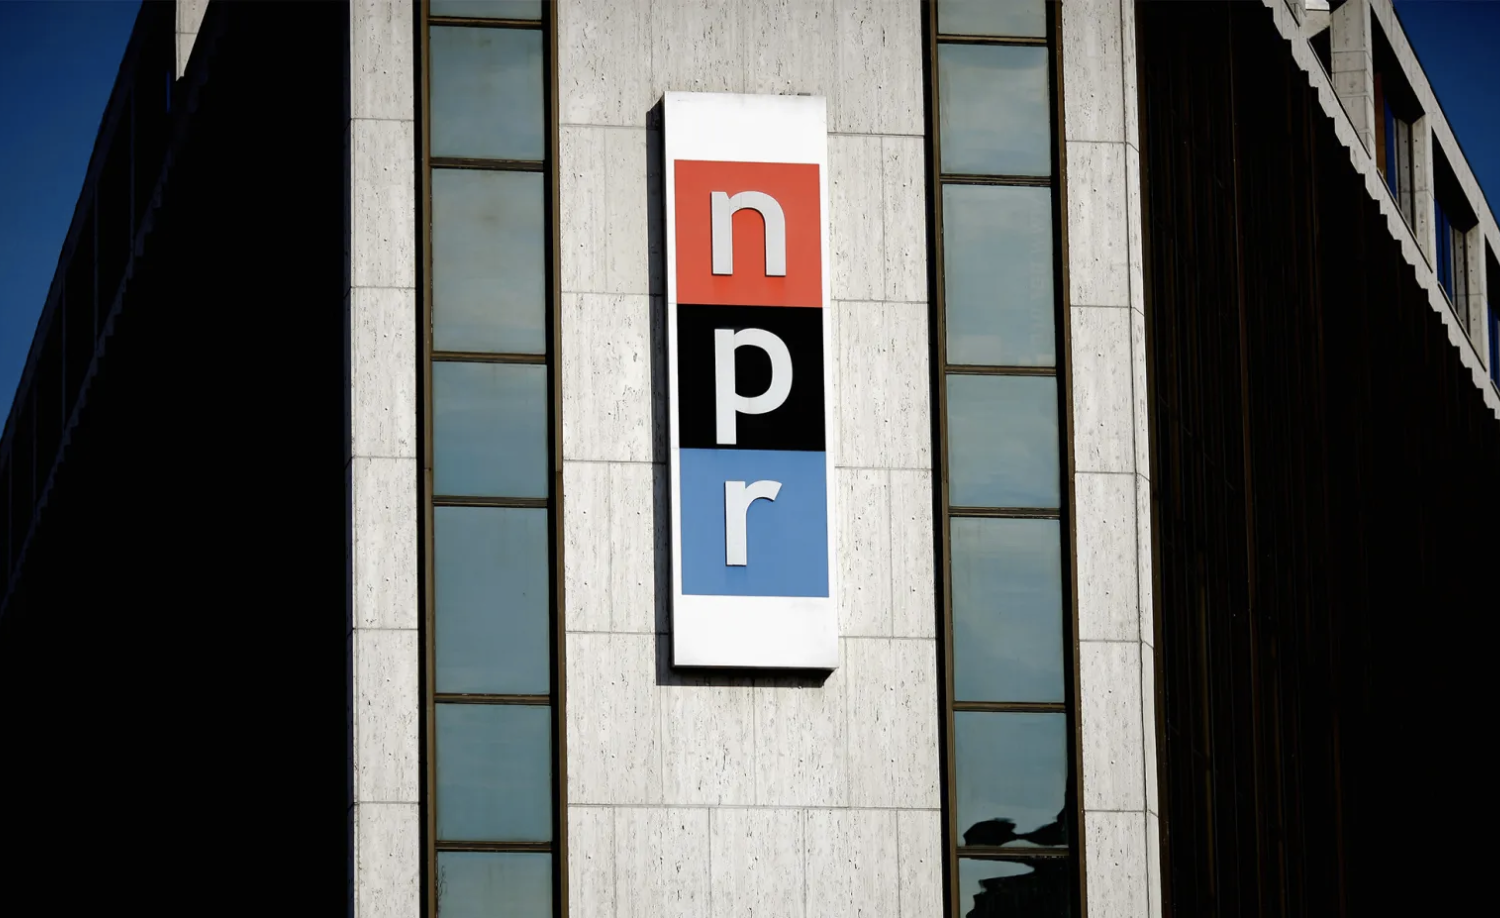 NPR headquarters in Washington, D.C.